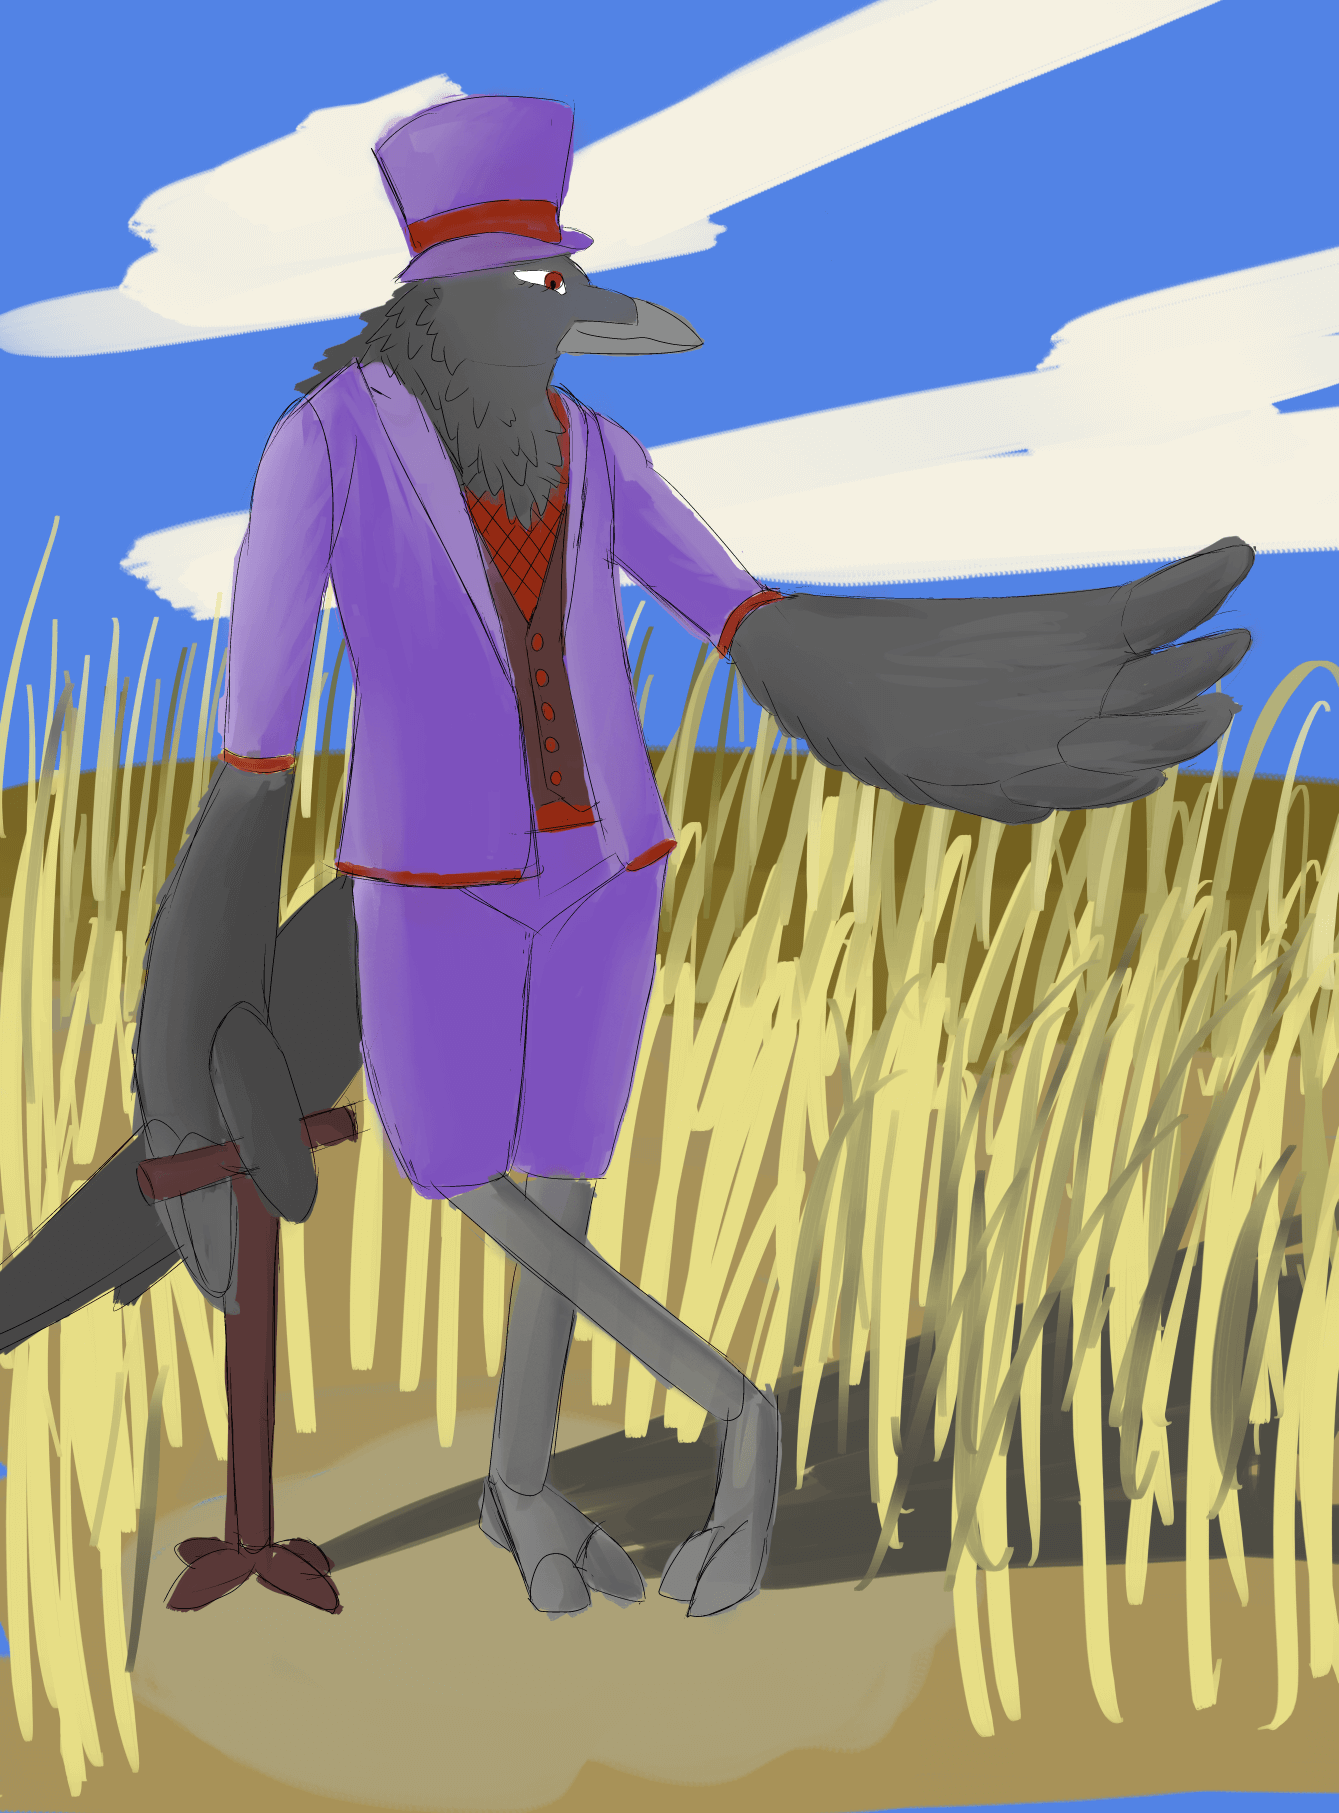 Anthro crow in a field of wheat wearing a tuxedo.